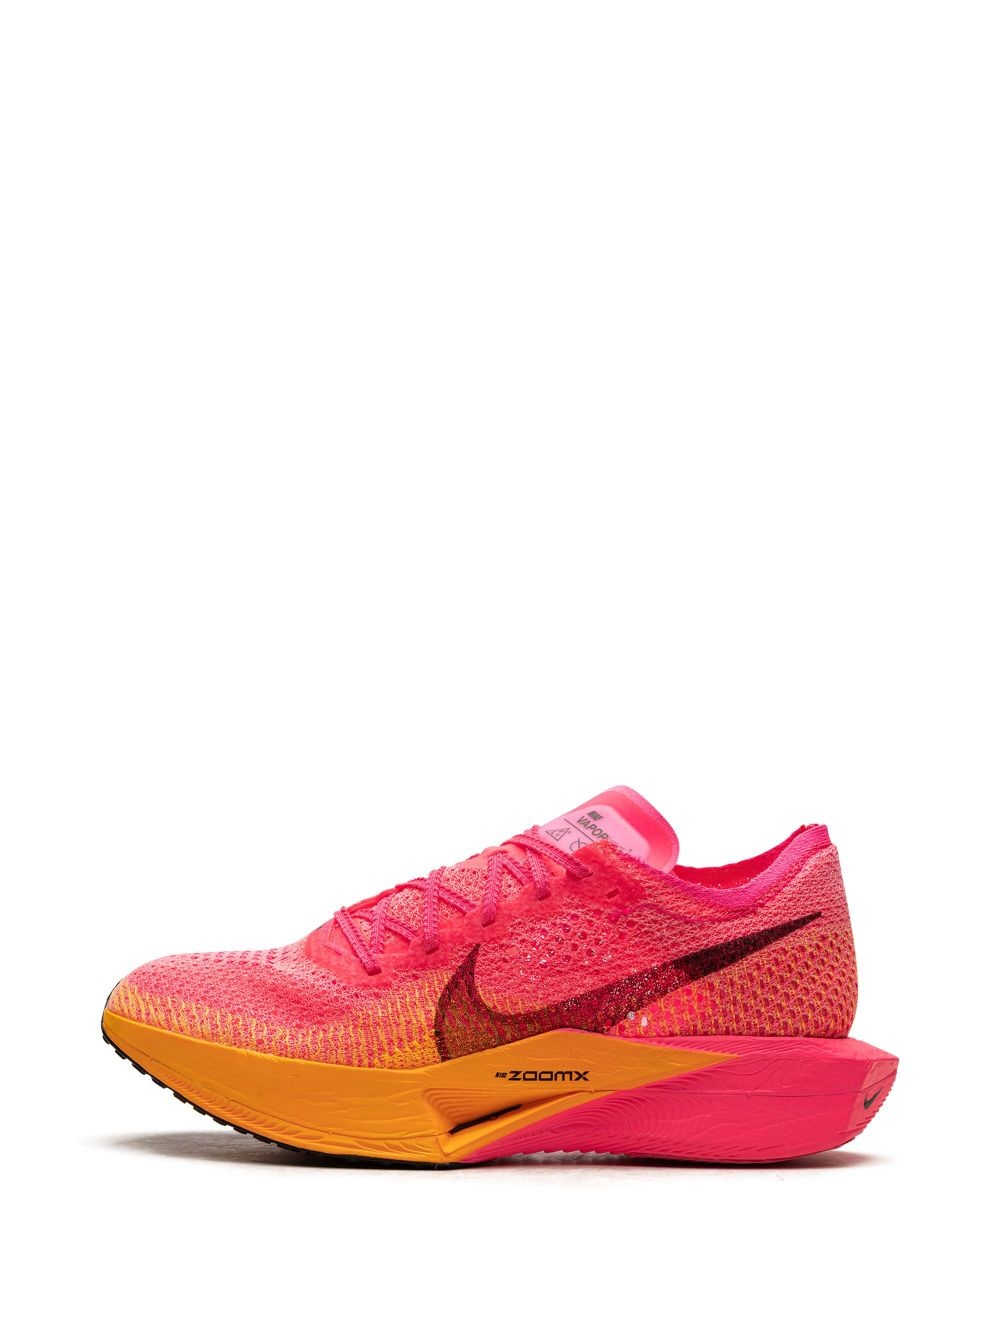 ZoomX Vaporfly Next% 3 "Hyper Pink/Laser Orange" sneakers - 5